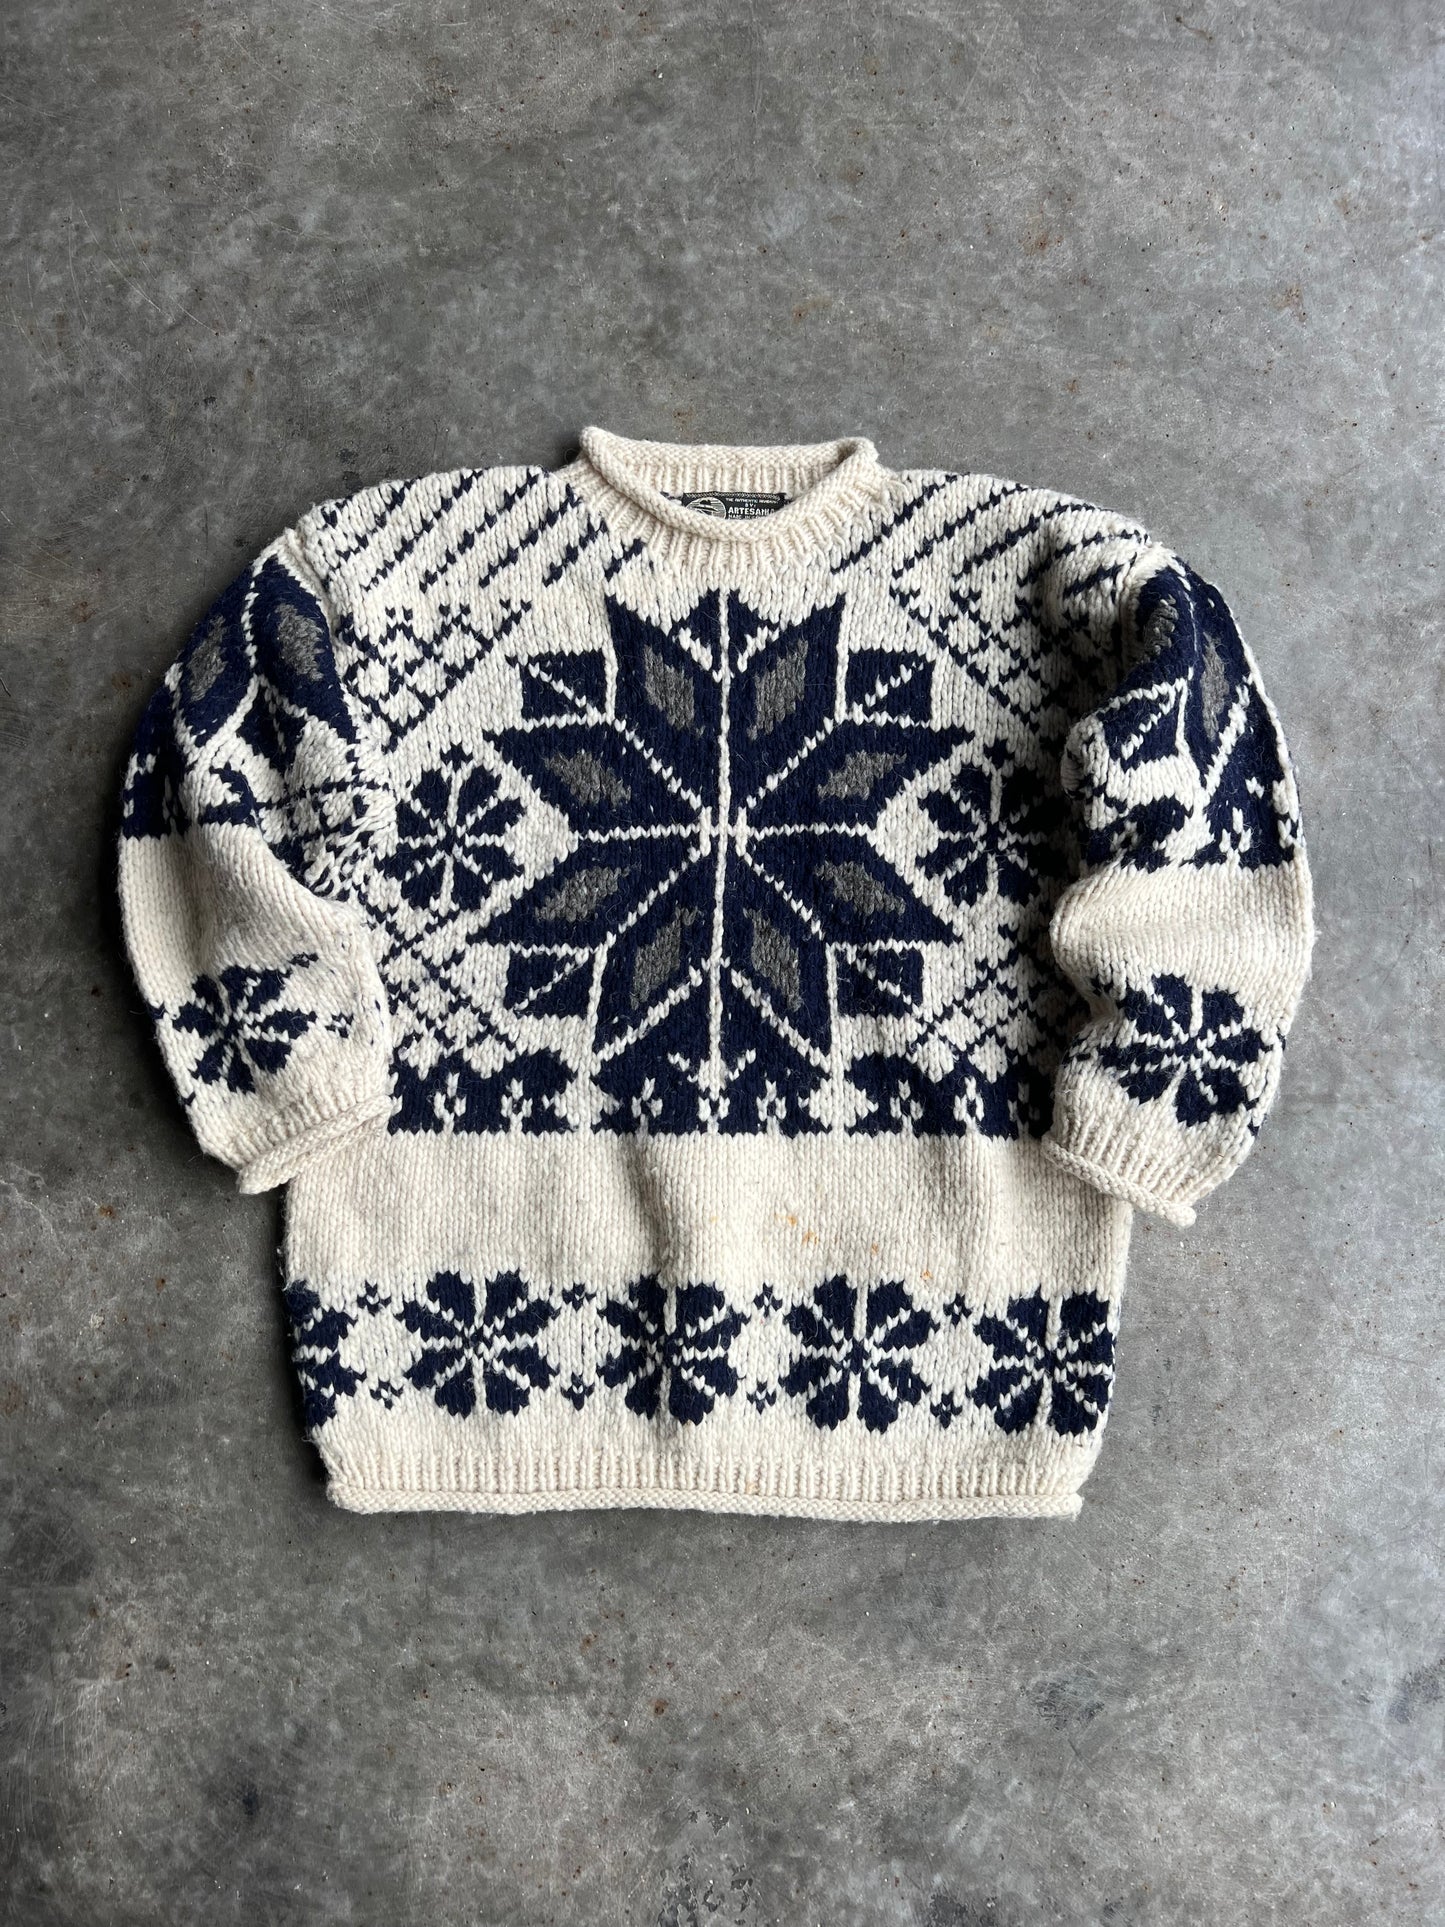 Vintage Artesania Chunky Patterned Sweater - XL